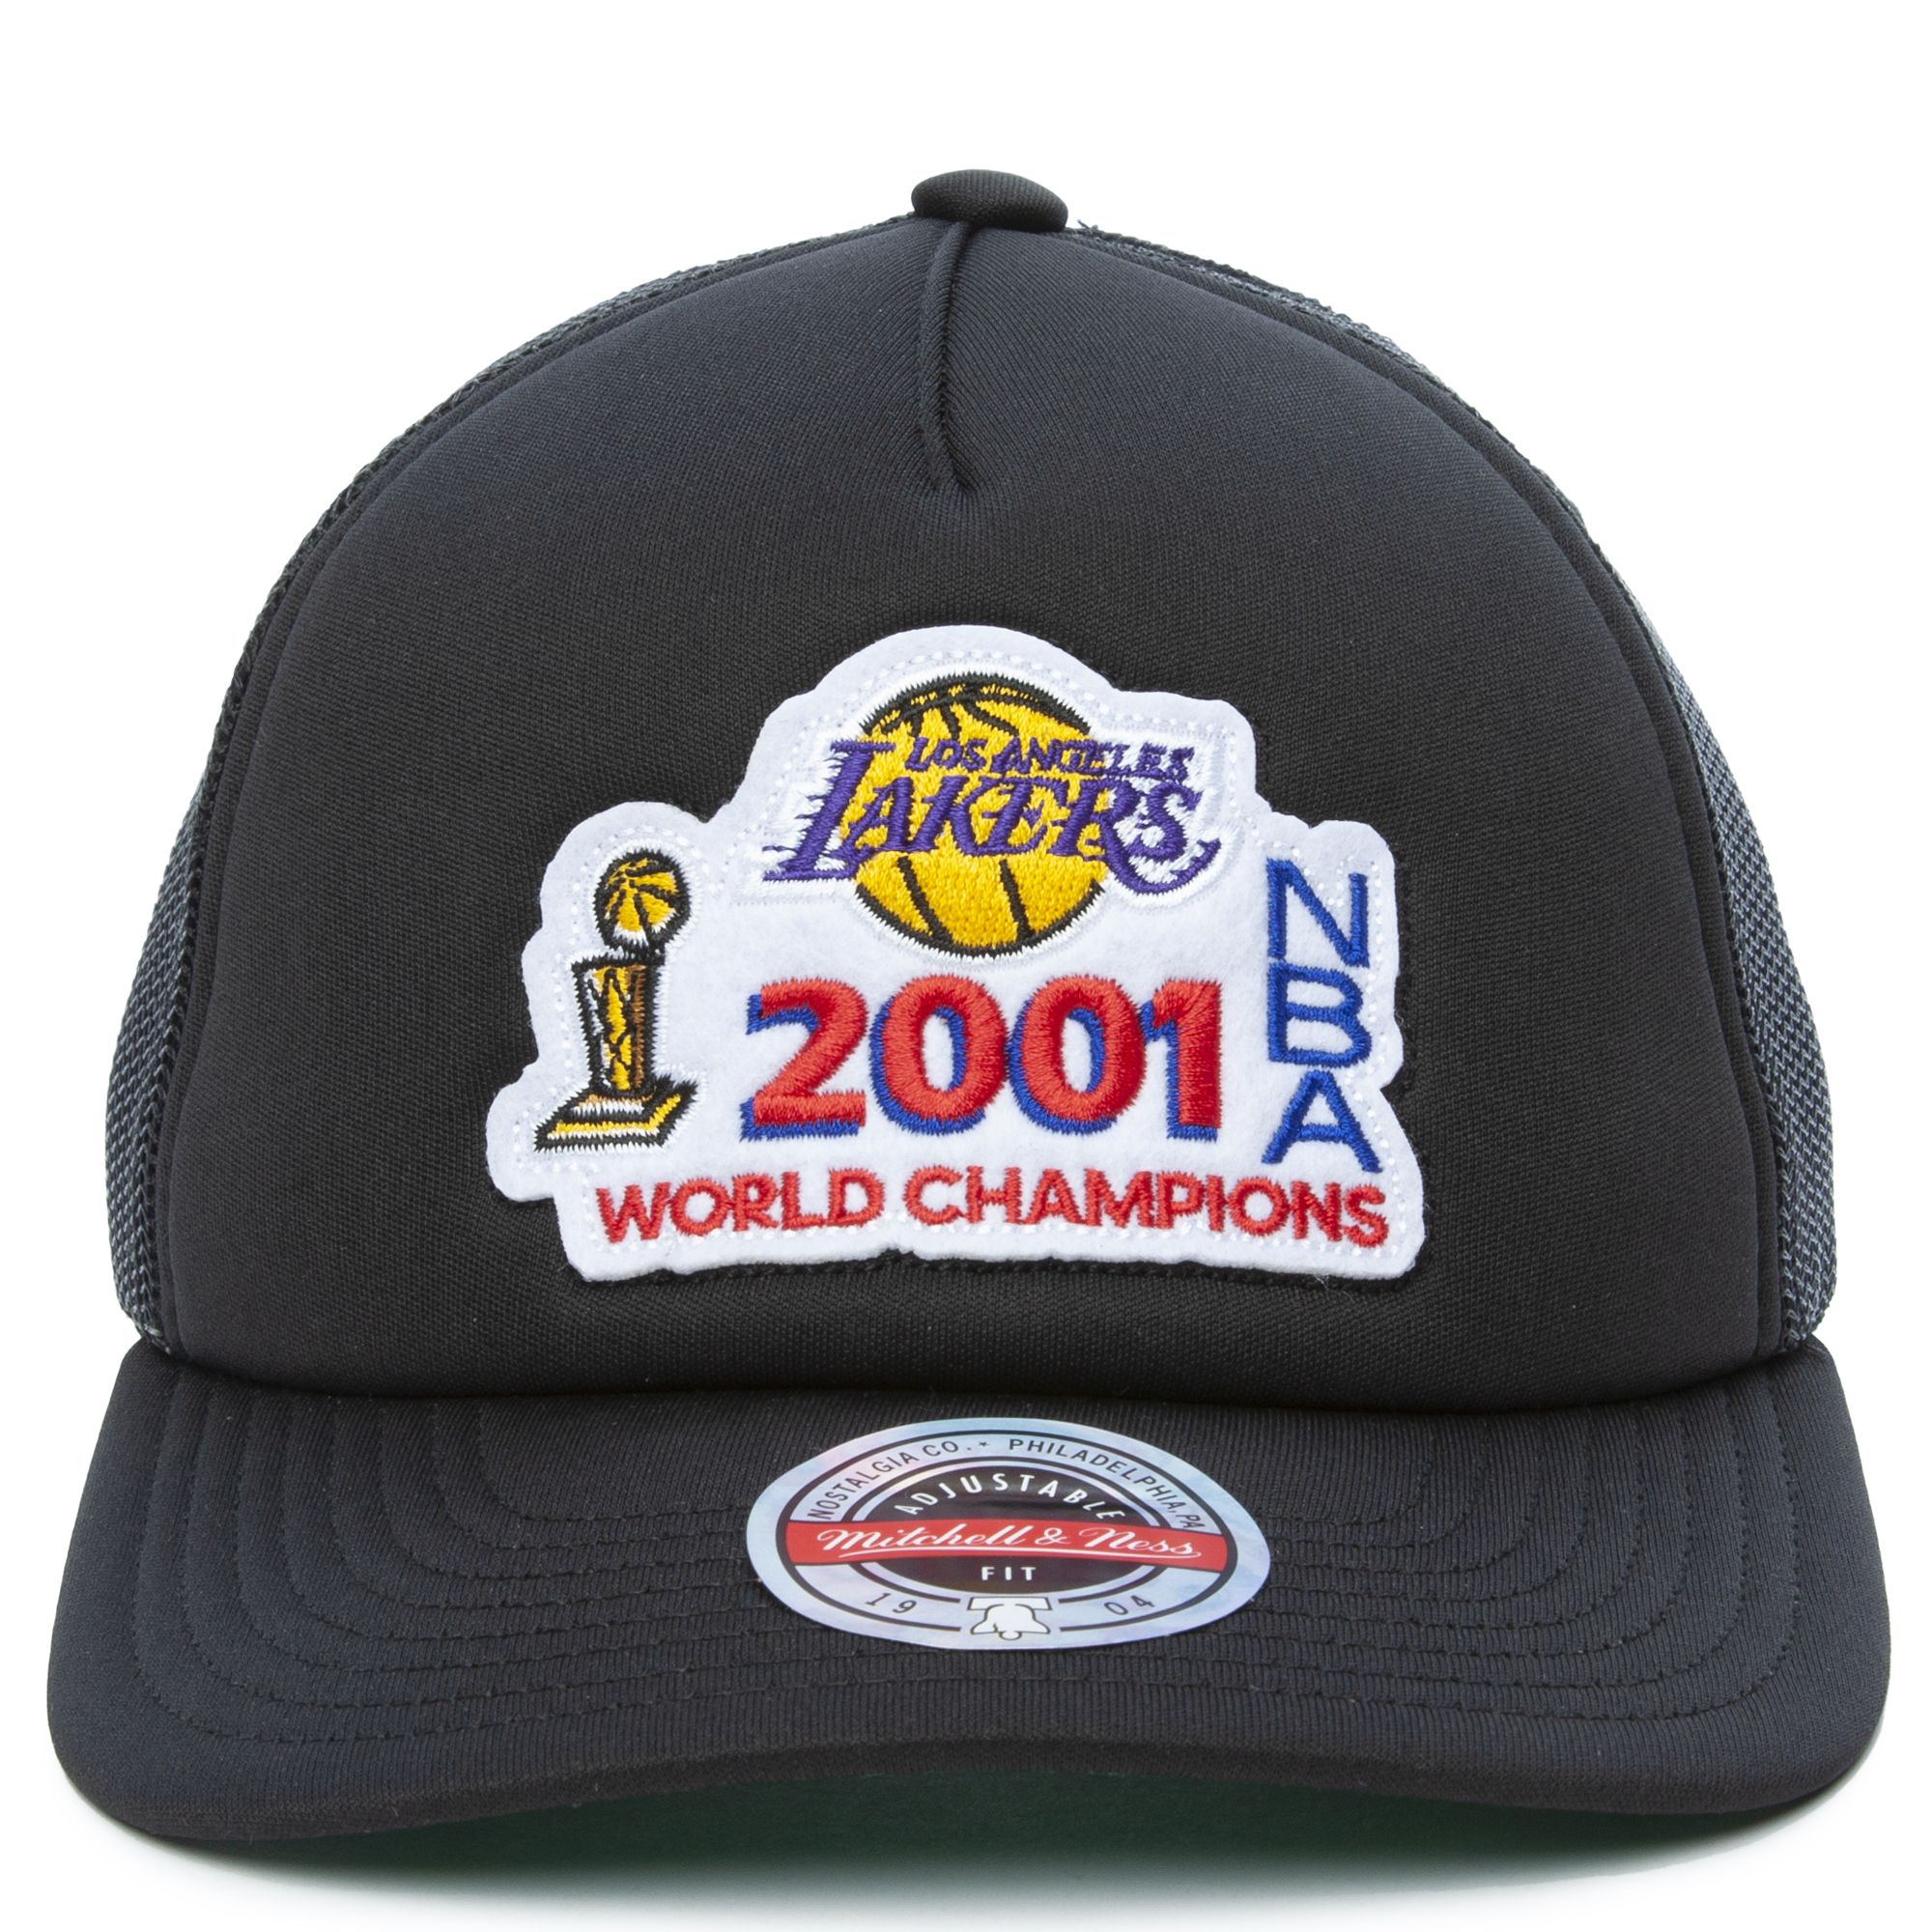 Mitchell & Ness NBA Finals 2001 Snapback Hat